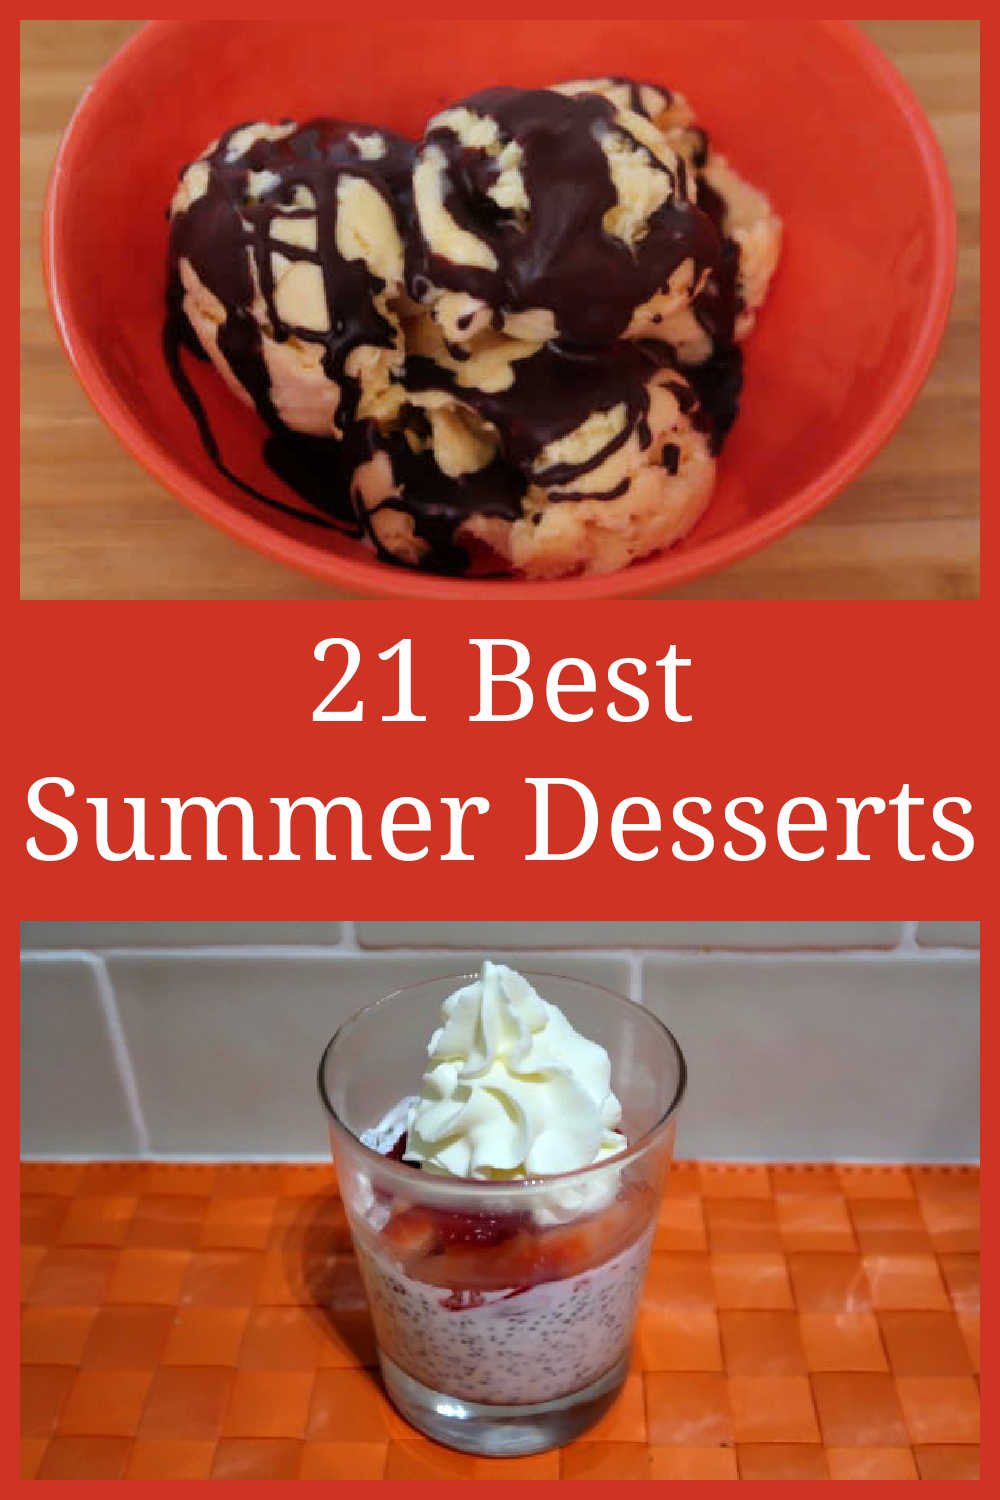 Best Summer Desserts Recipes - 21 easy dessert ideas that taste good - including insanely quick no bake sweet treats.